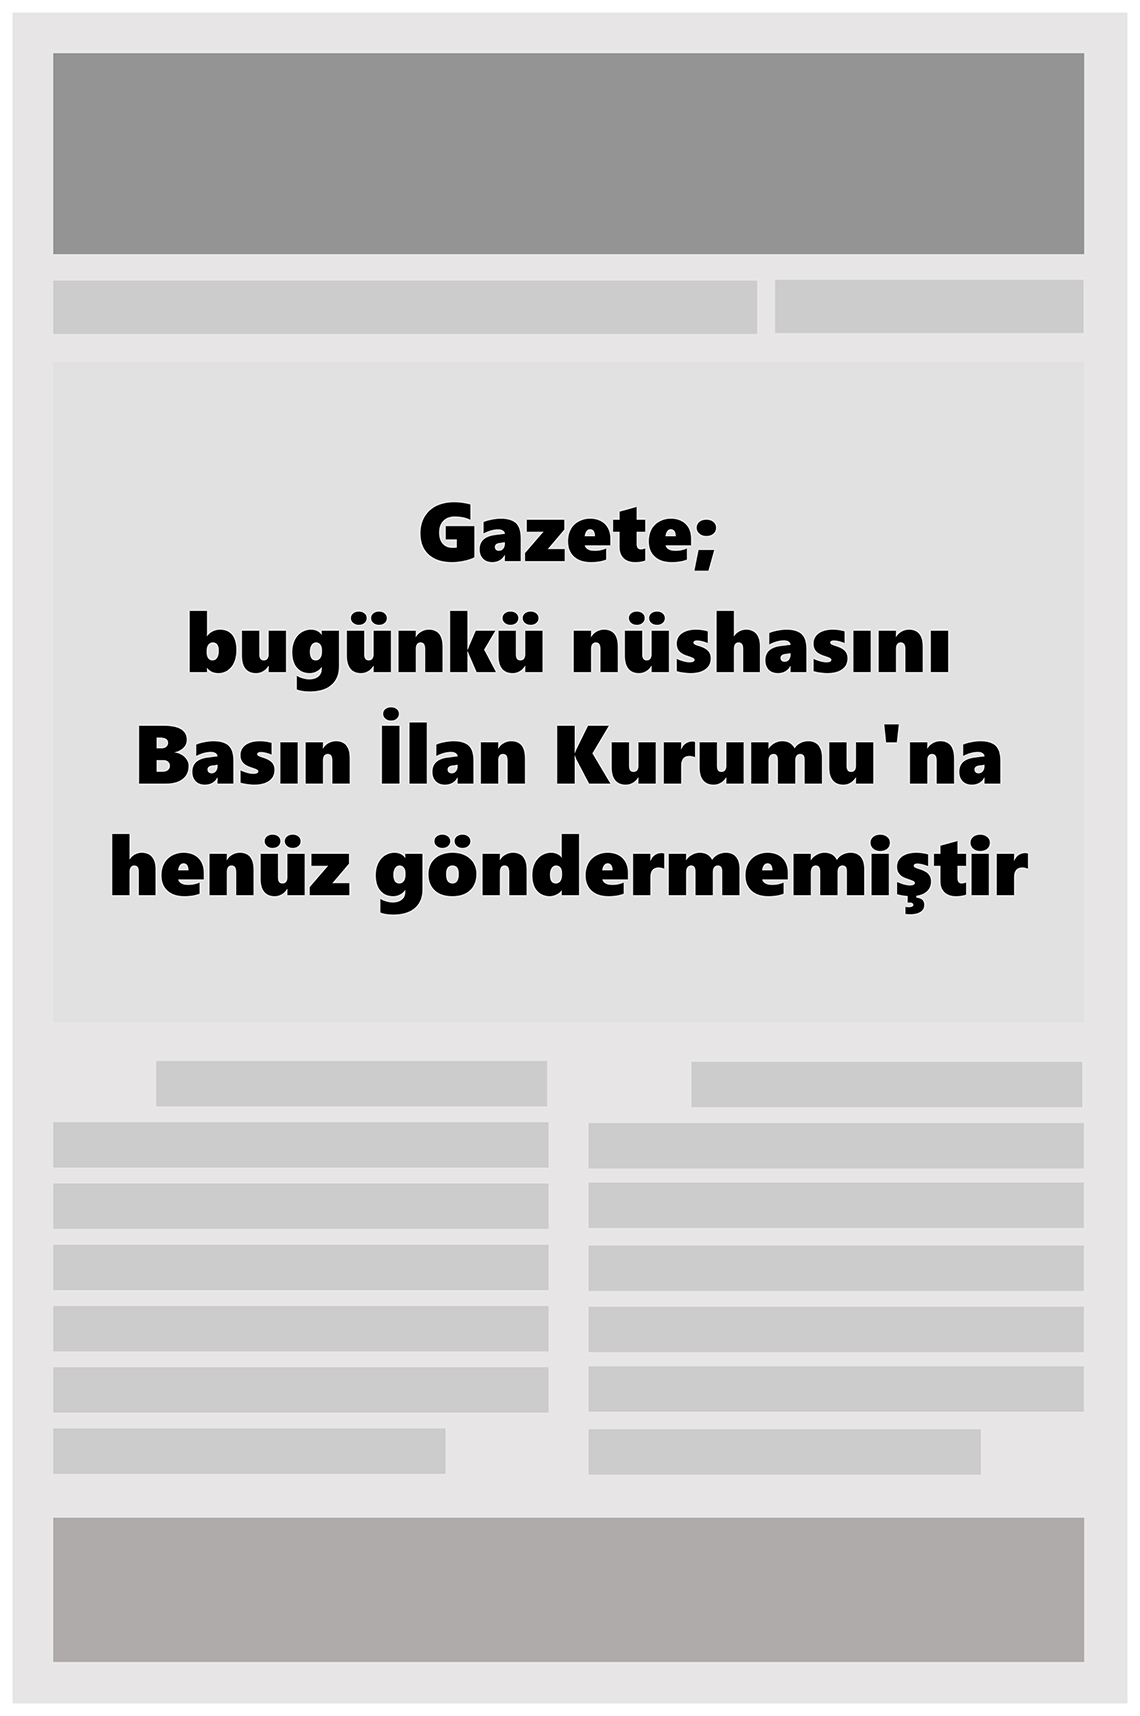 21 Ağustos 2022 Yüksekova Halkın Sesi Gazete Manşeti